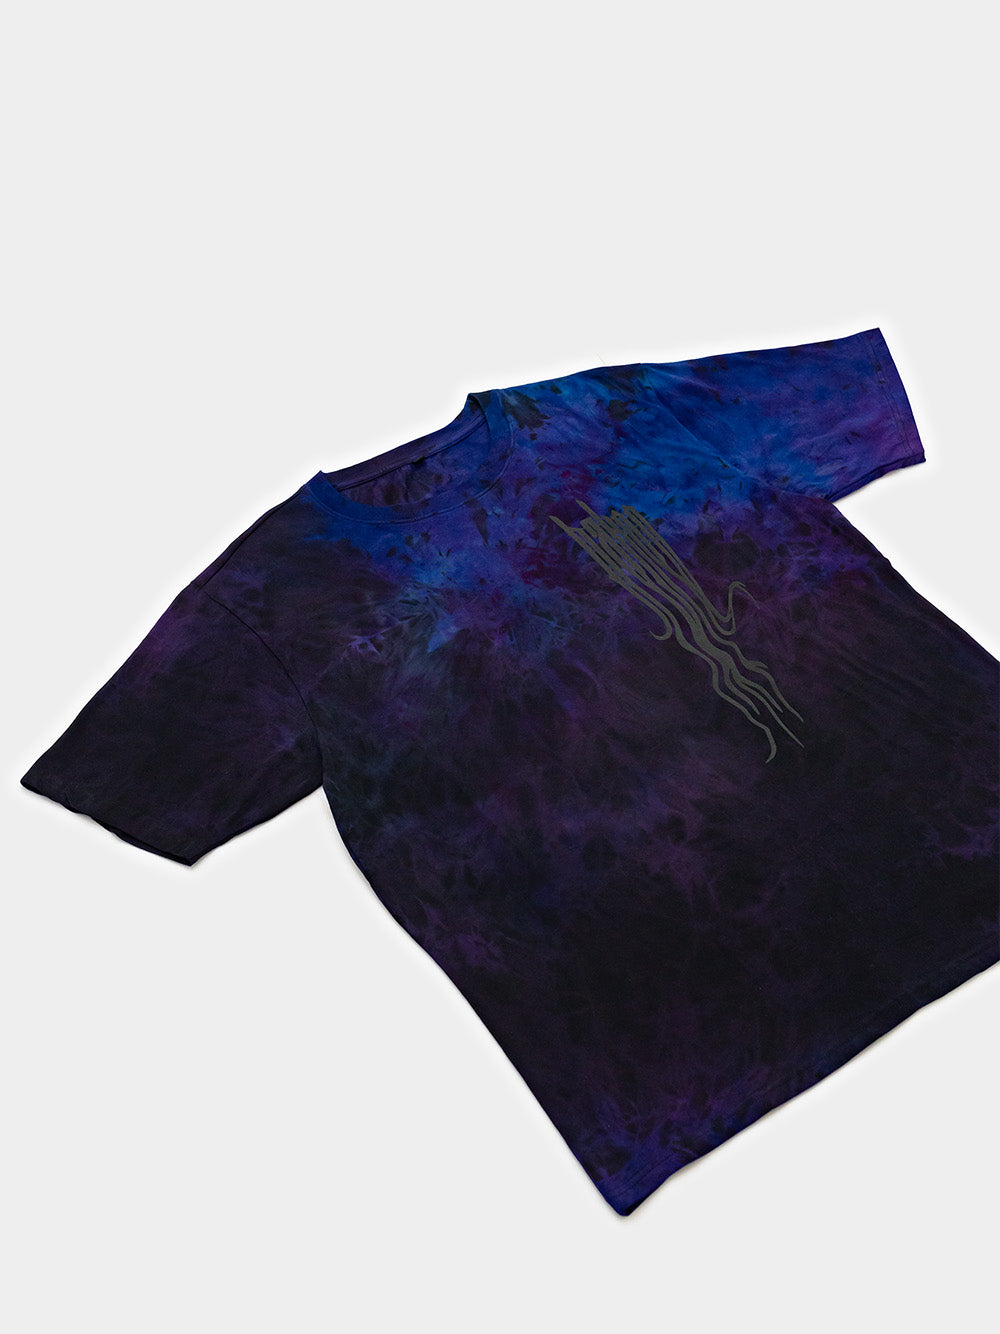 Pacify Constellation - T-Shirt